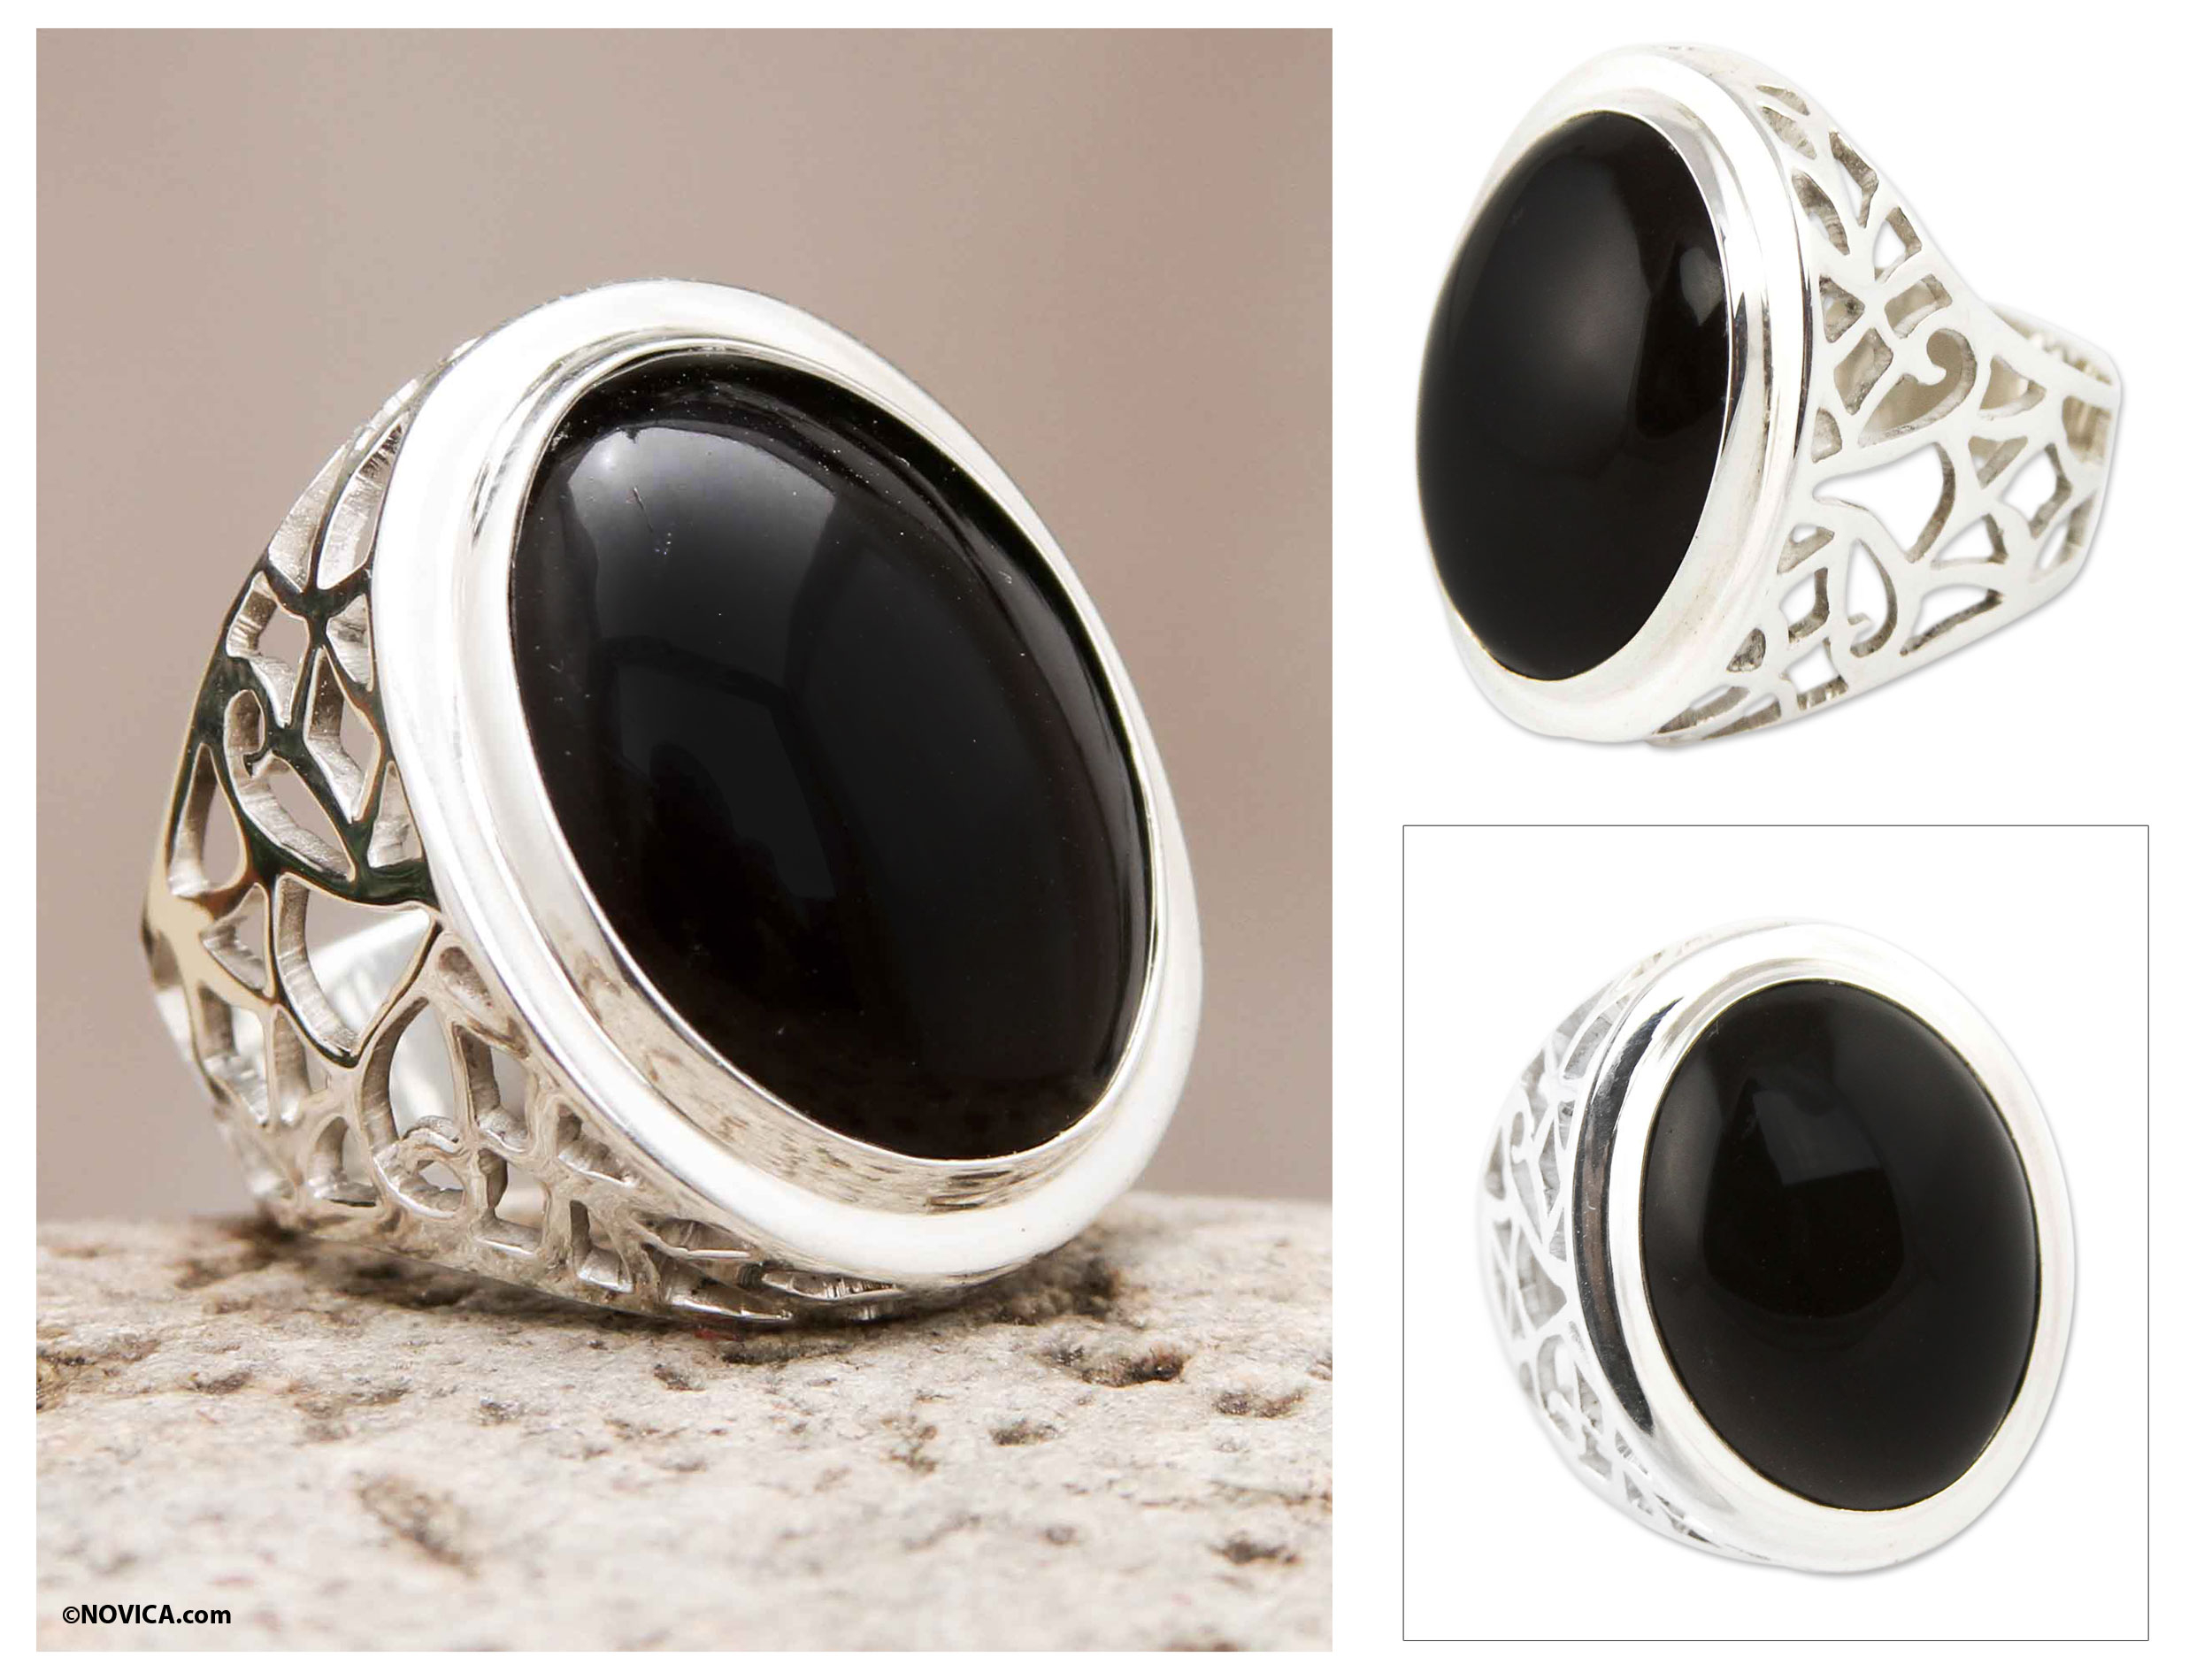 The Obsidian Noir Black Titanium Ring